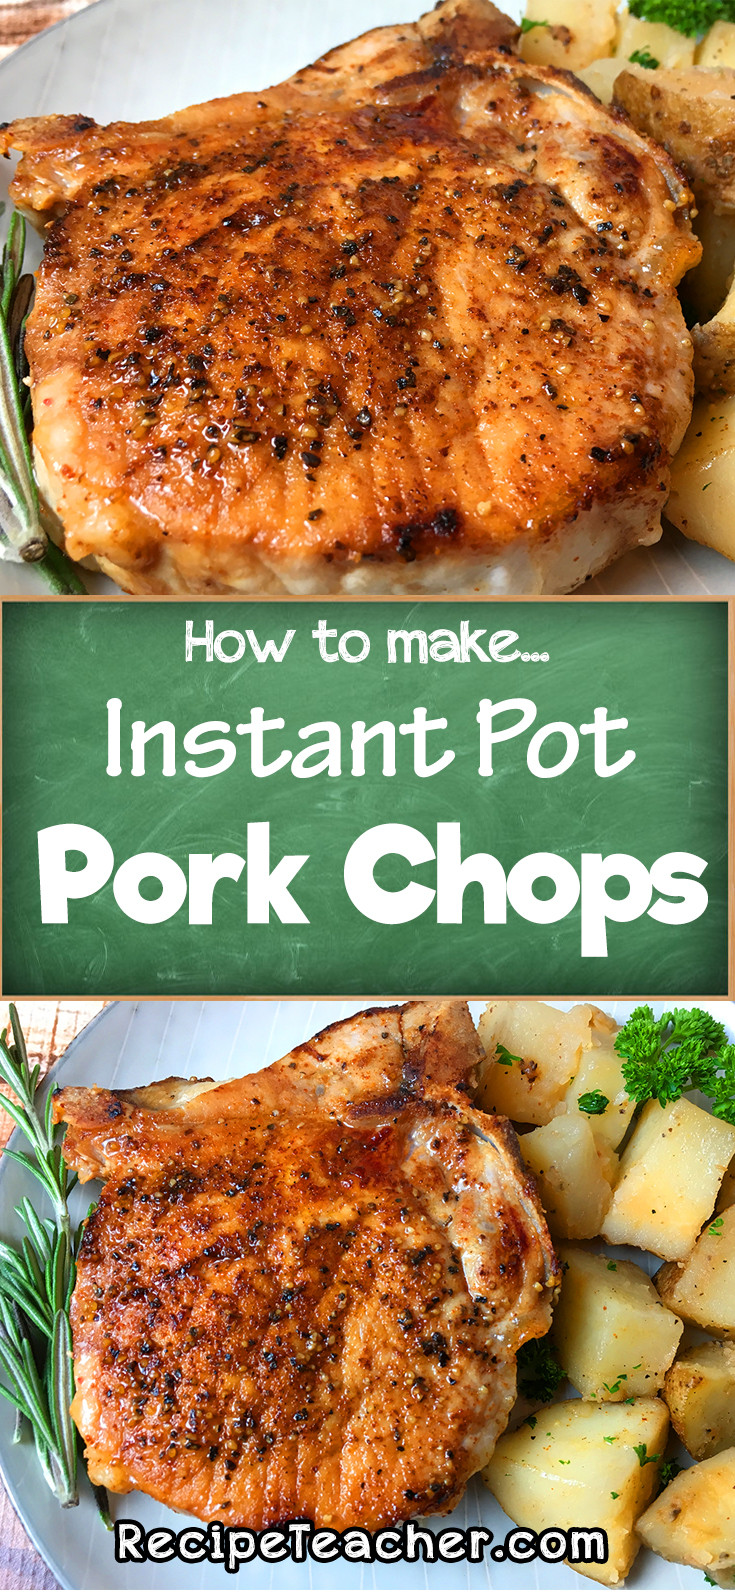 Instant Pot Recipe For Pork Chops
 Instant Pot Pork Chops RecipeTeacher